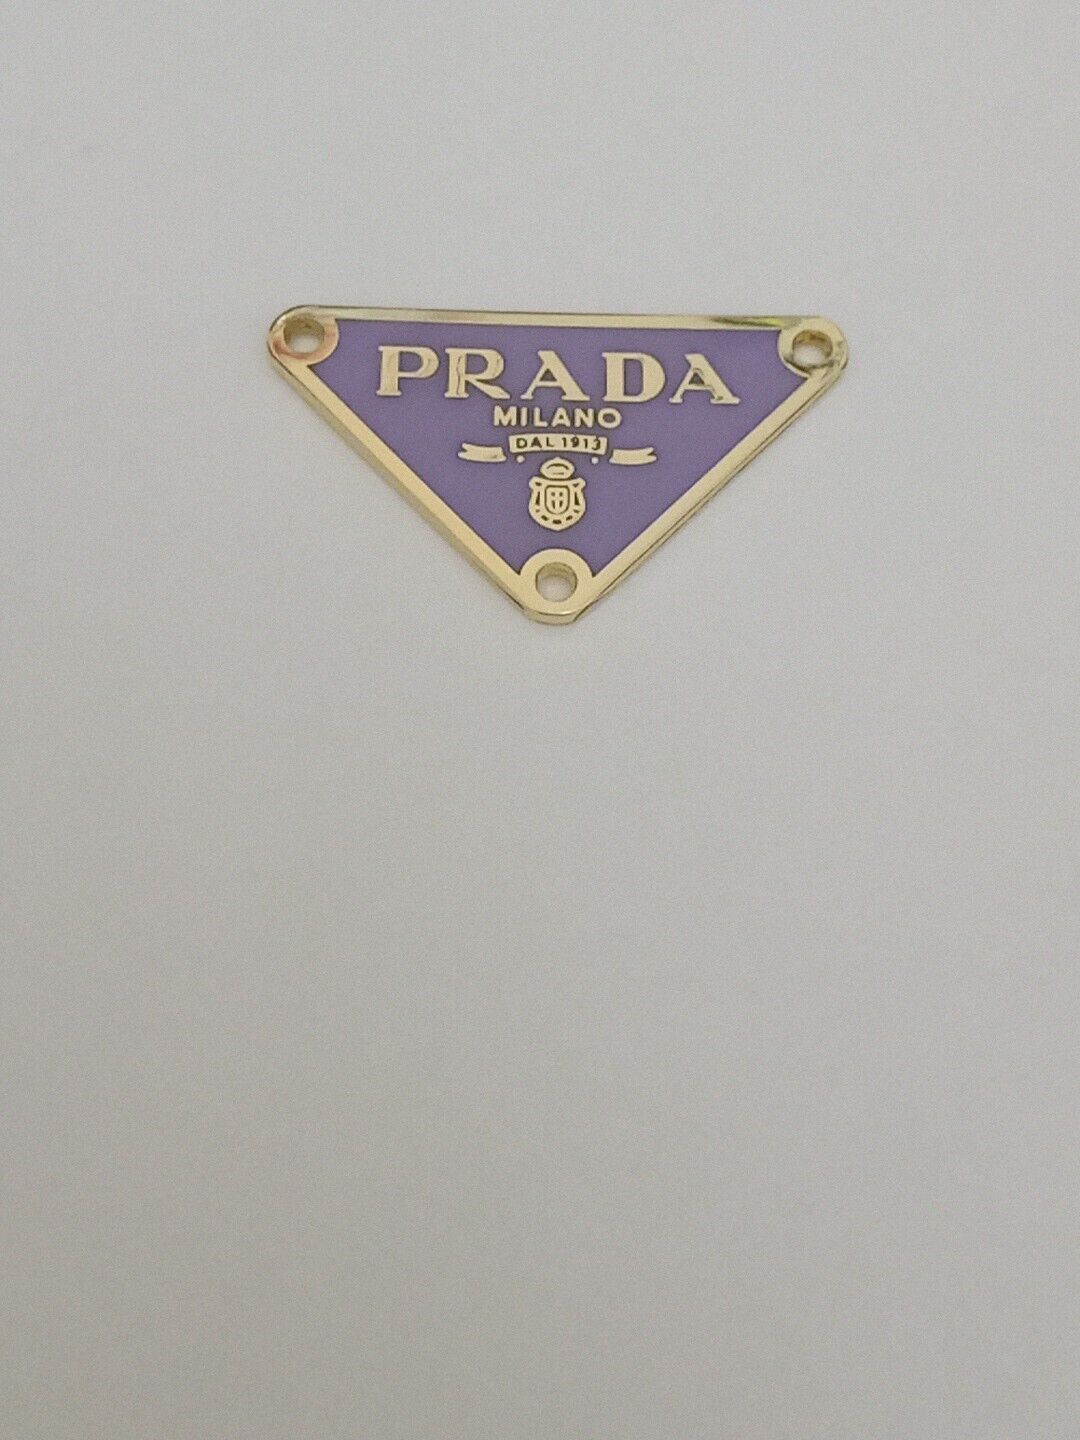 Gold OnPCPurple 38mm Prada Logo Triangle with trim  gold tone Button  Zipperpull